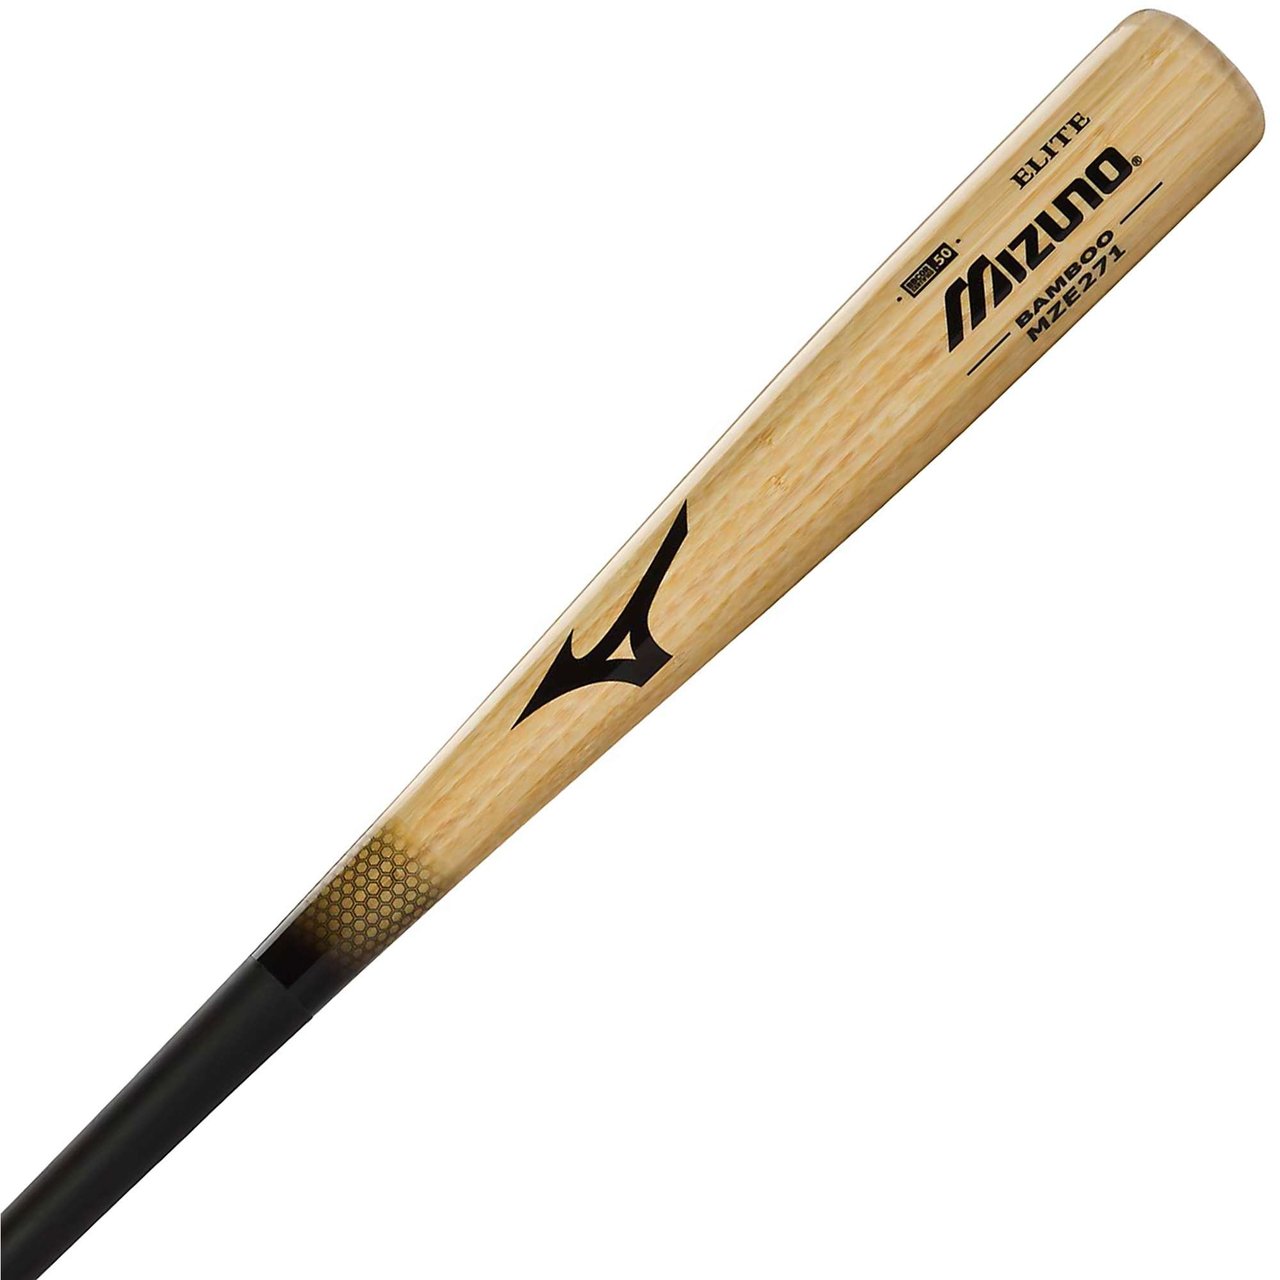 mizuno-mze271-bamboo-elite-wood-baseball-bat-120-day-warranty-32-inch MZE271-32 Inch Mizuno 041969366356 US Patent Pending Design. 120 Day Manufacturers Warranty. Bamboo and Glass